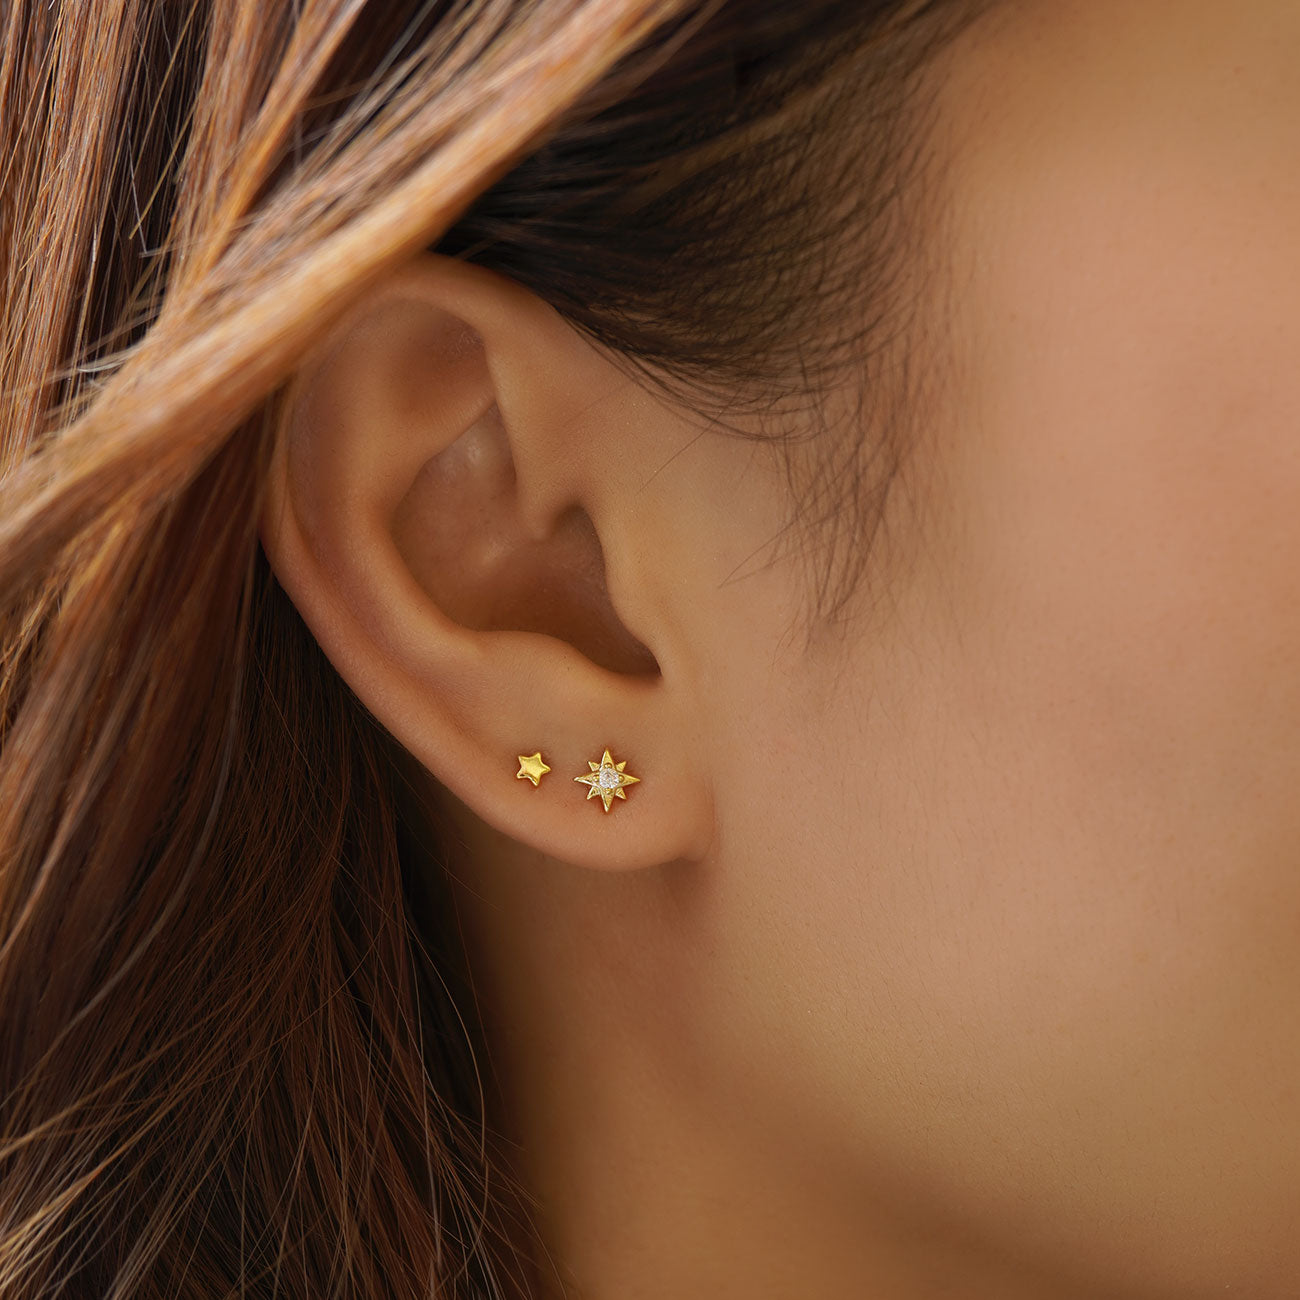 22k Plain Gold Earring JG-2206-06236 – Jewelegance